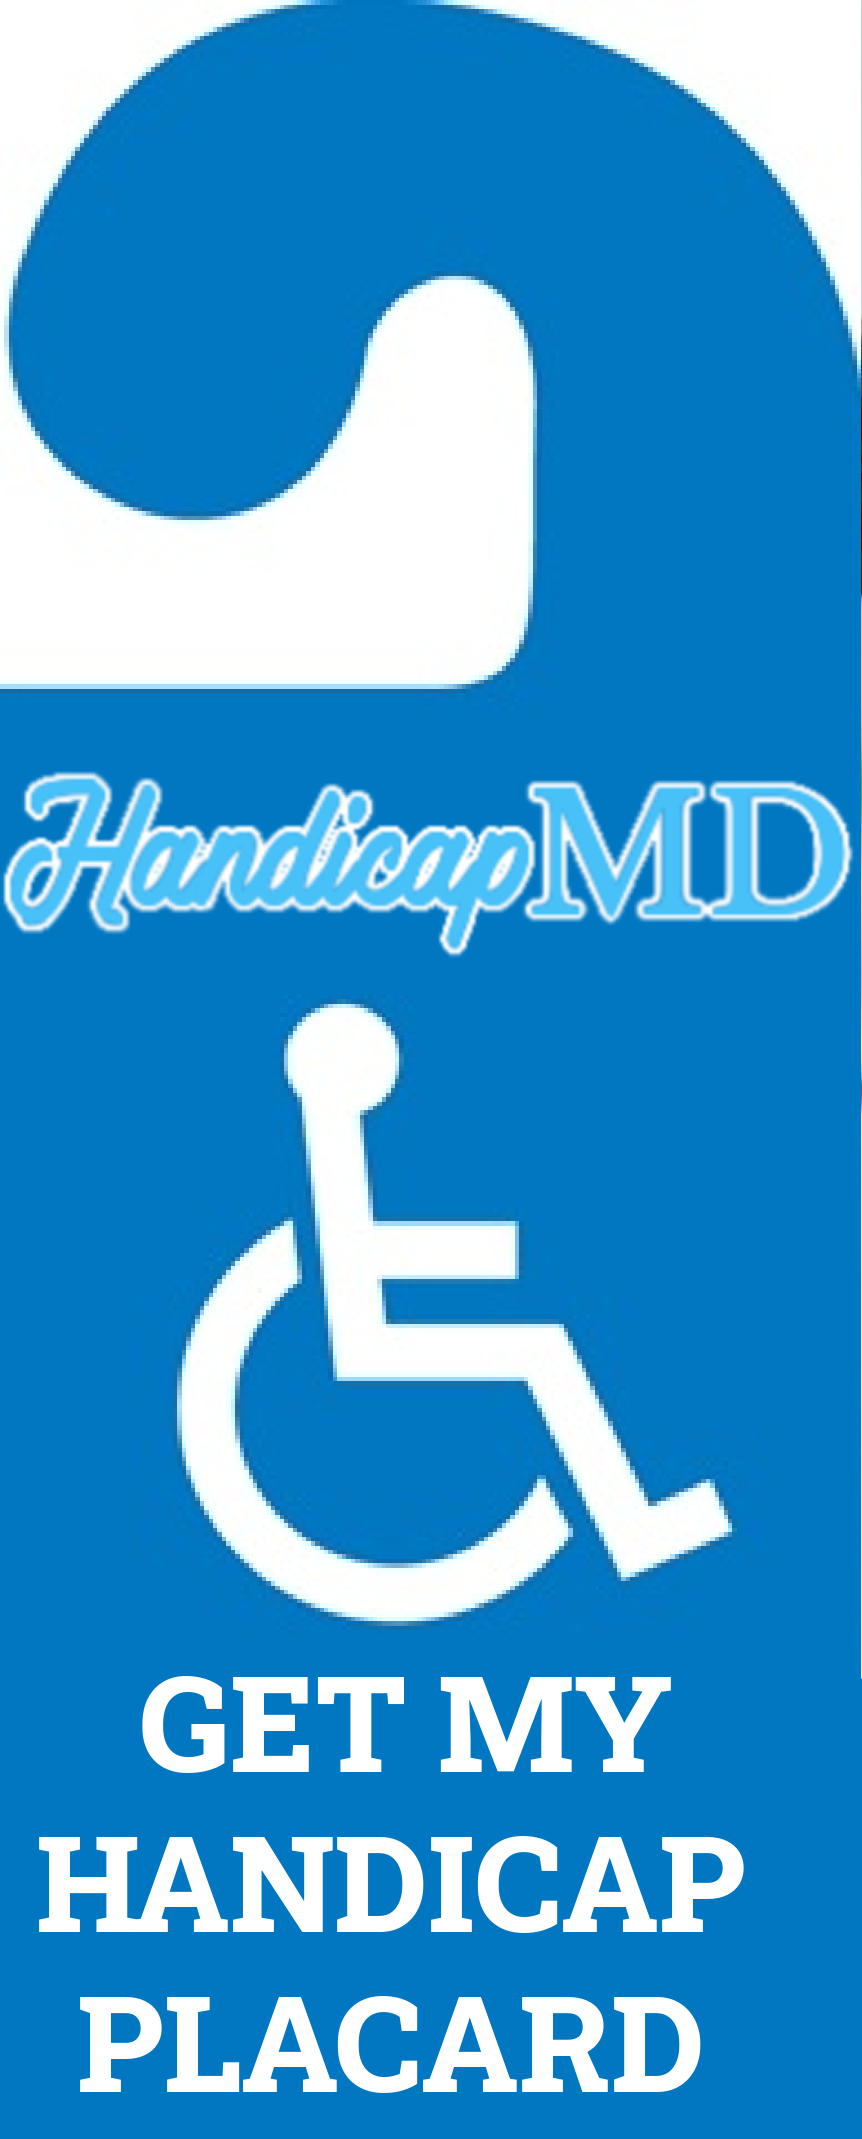 How To Get A Handicap Parking Placard Renewal in Utah